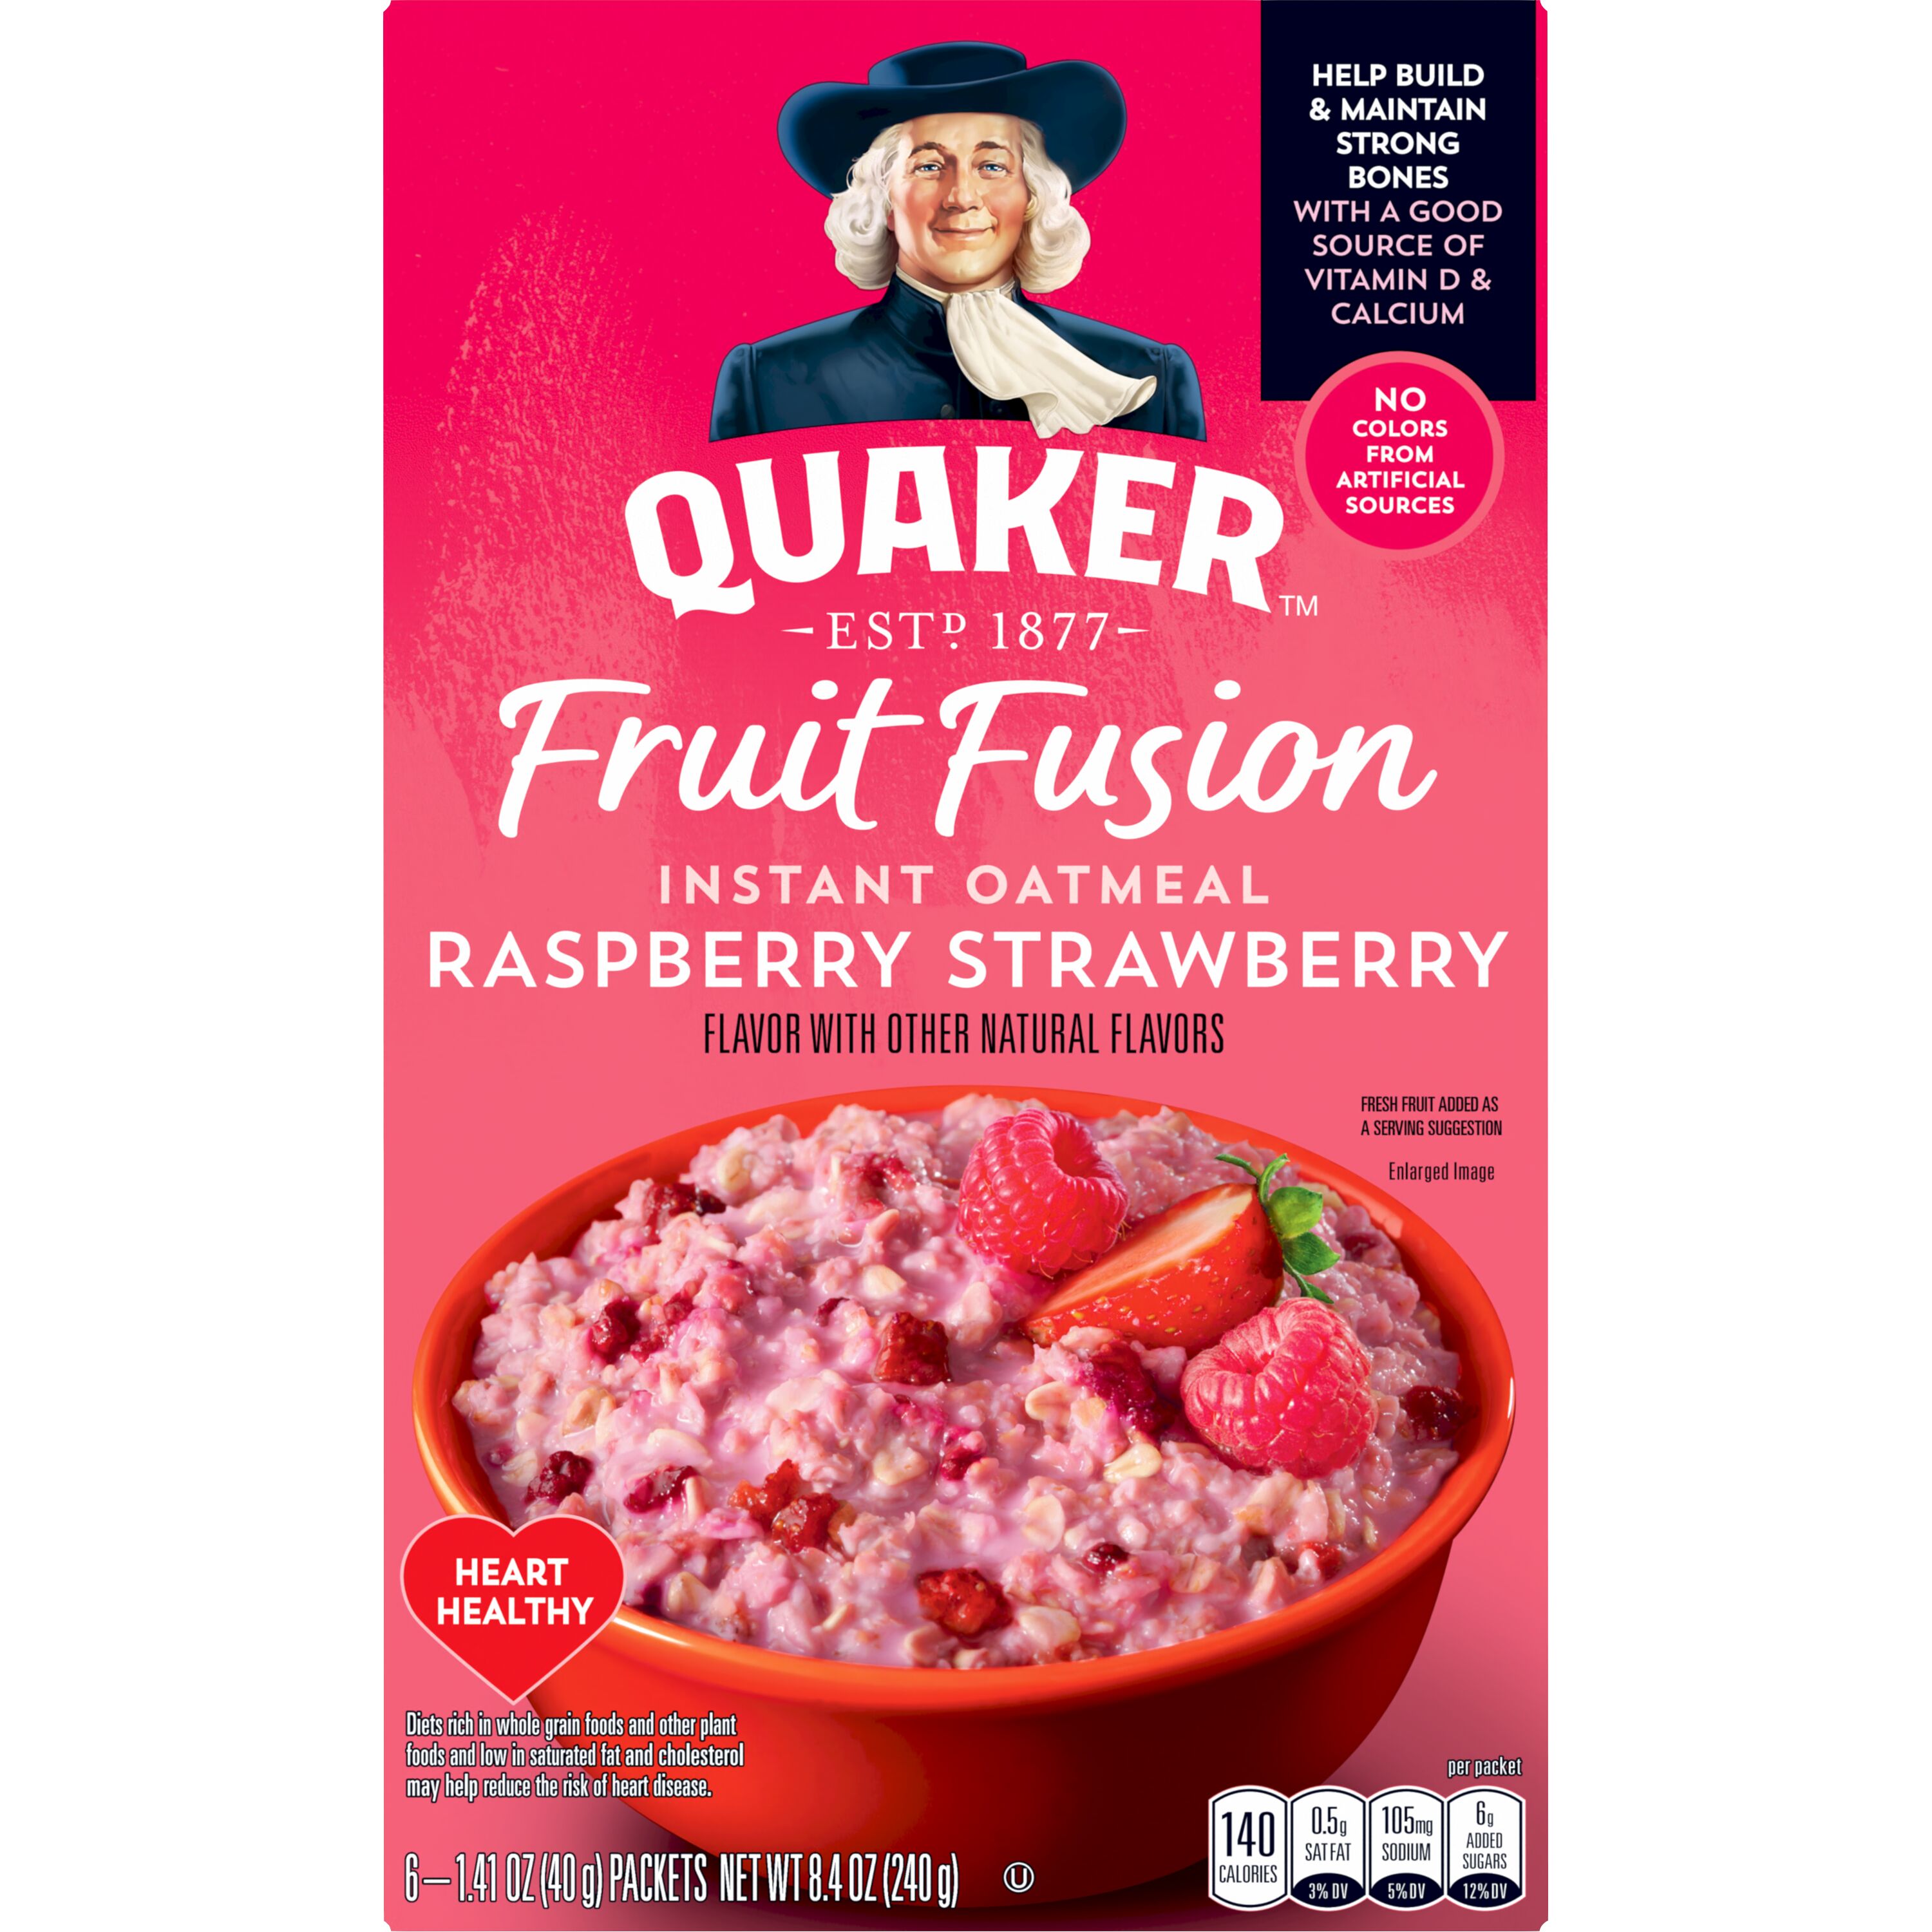 Quaker, Fruit Fusion, Raspberry Strawberry Flavor, Instant Oatmeal ...